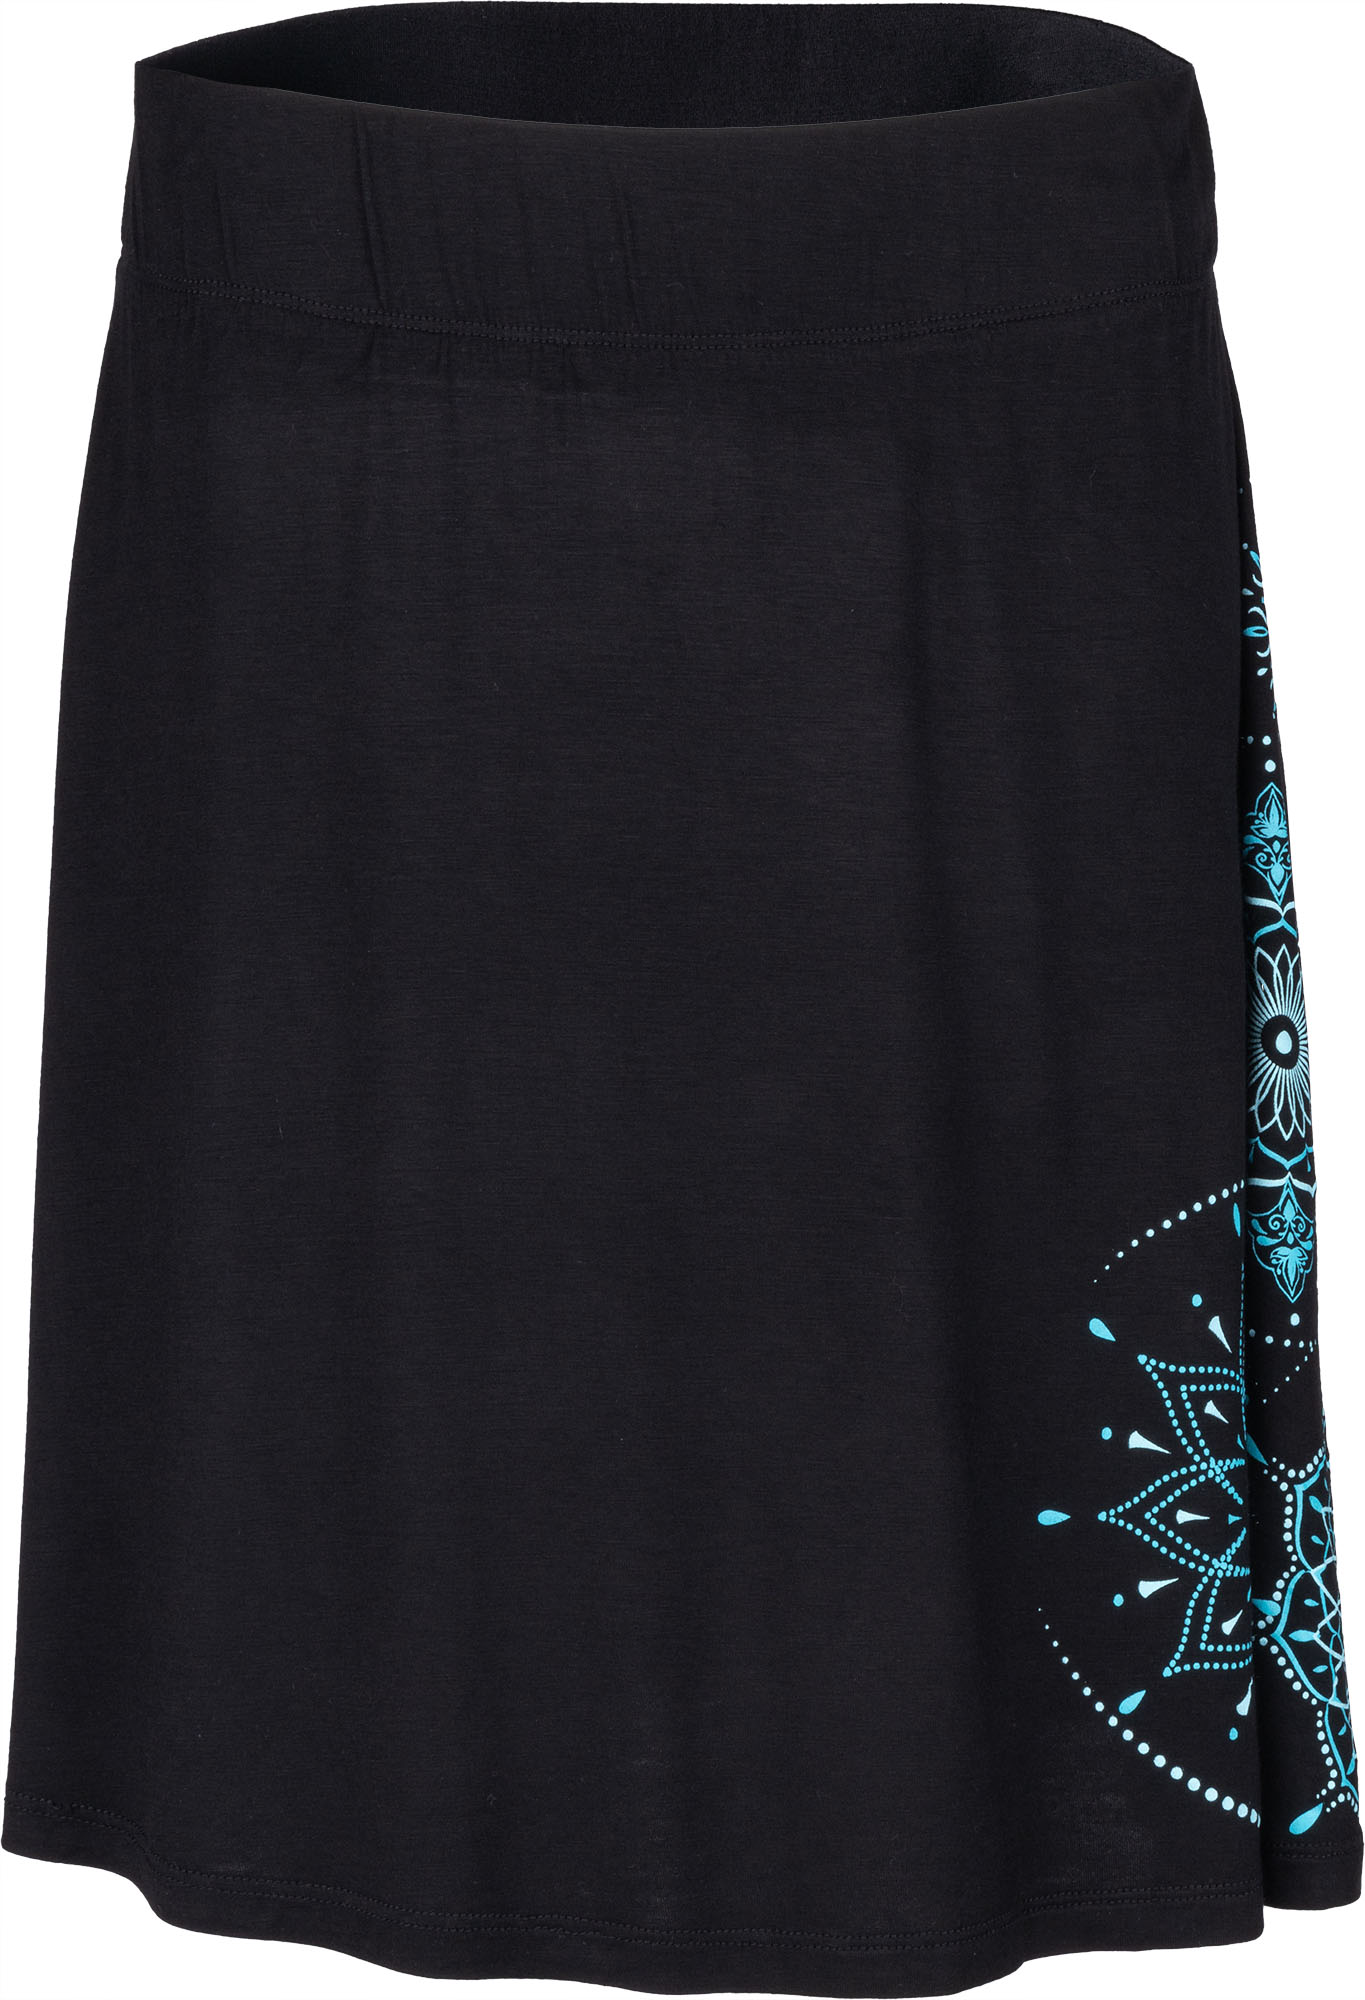 Women's knit skirt